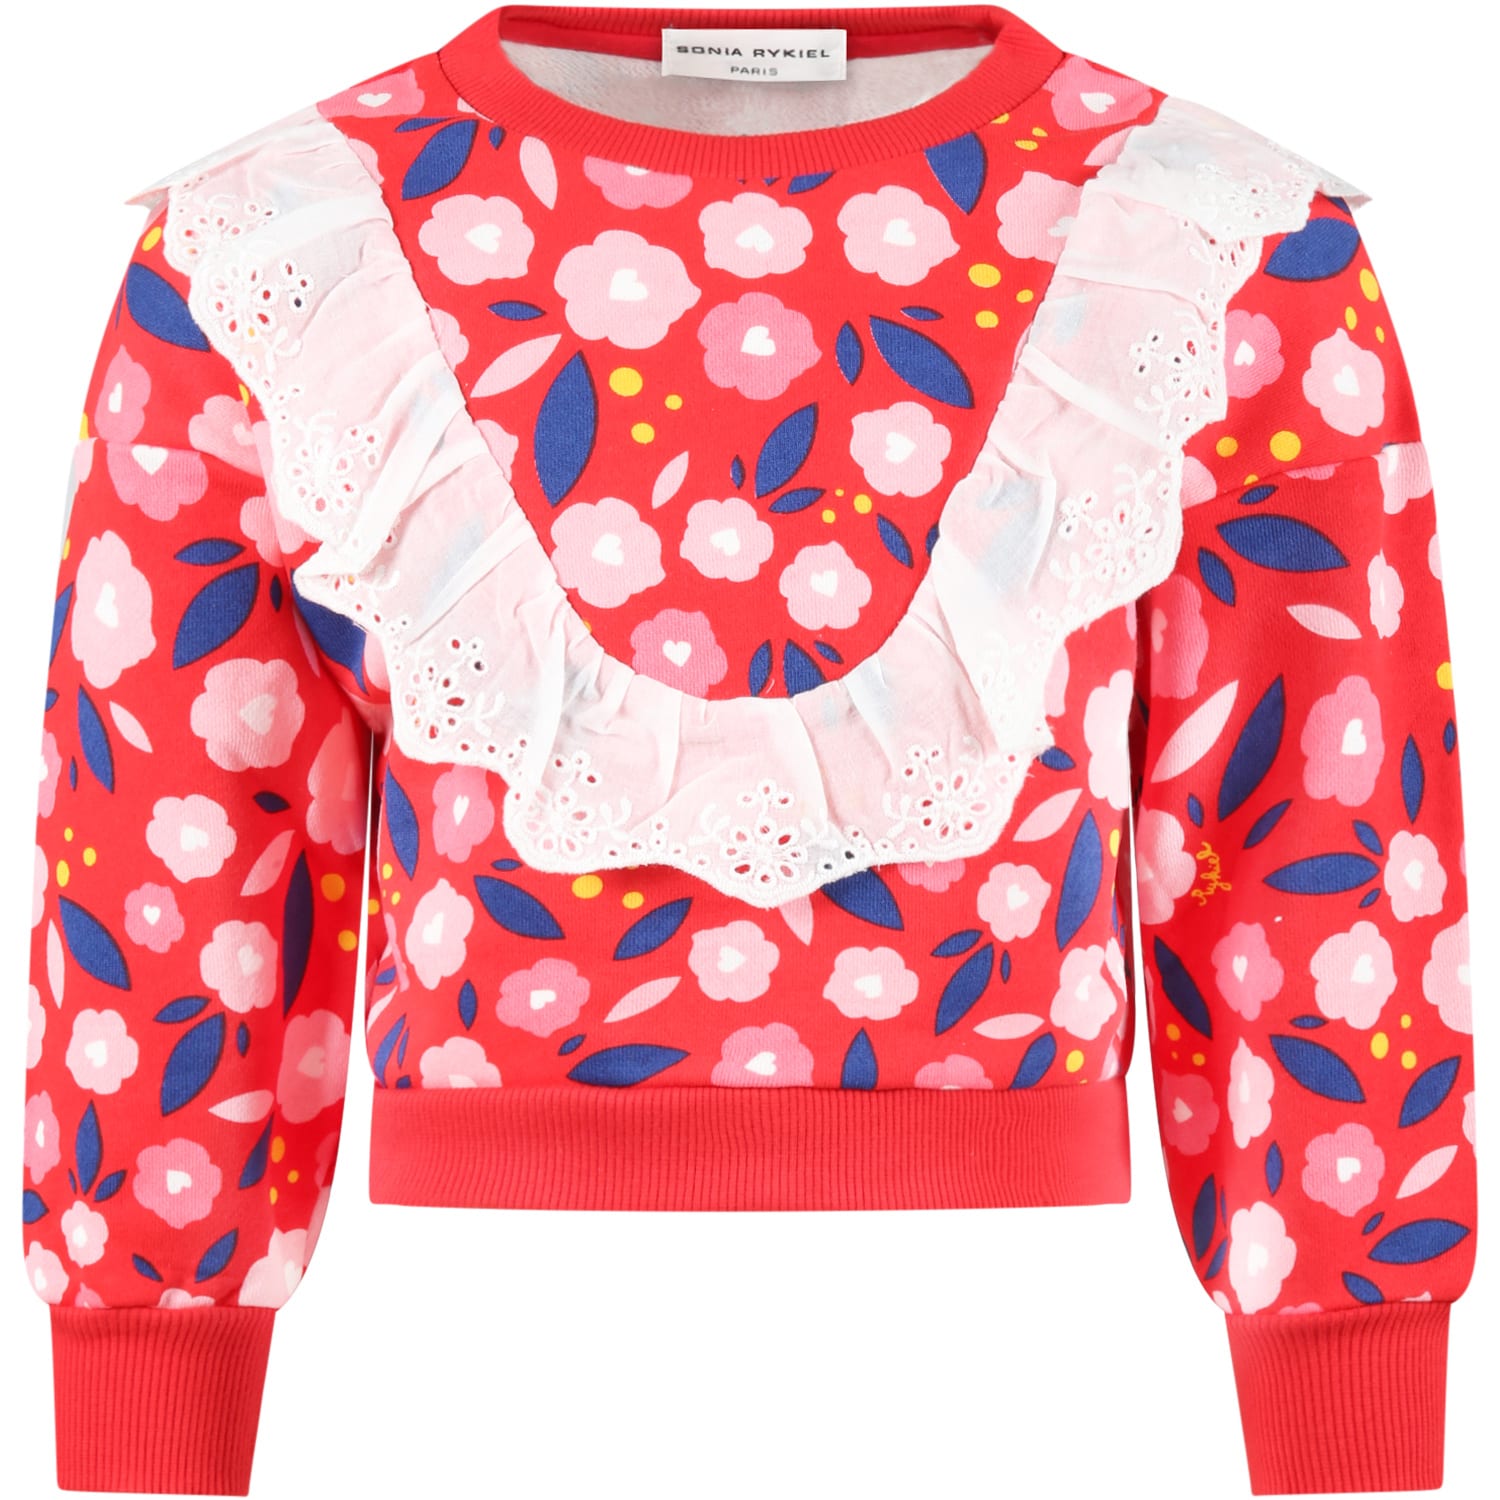 Sonia Rykiel Red Sweatshirt For Girl With Flowers